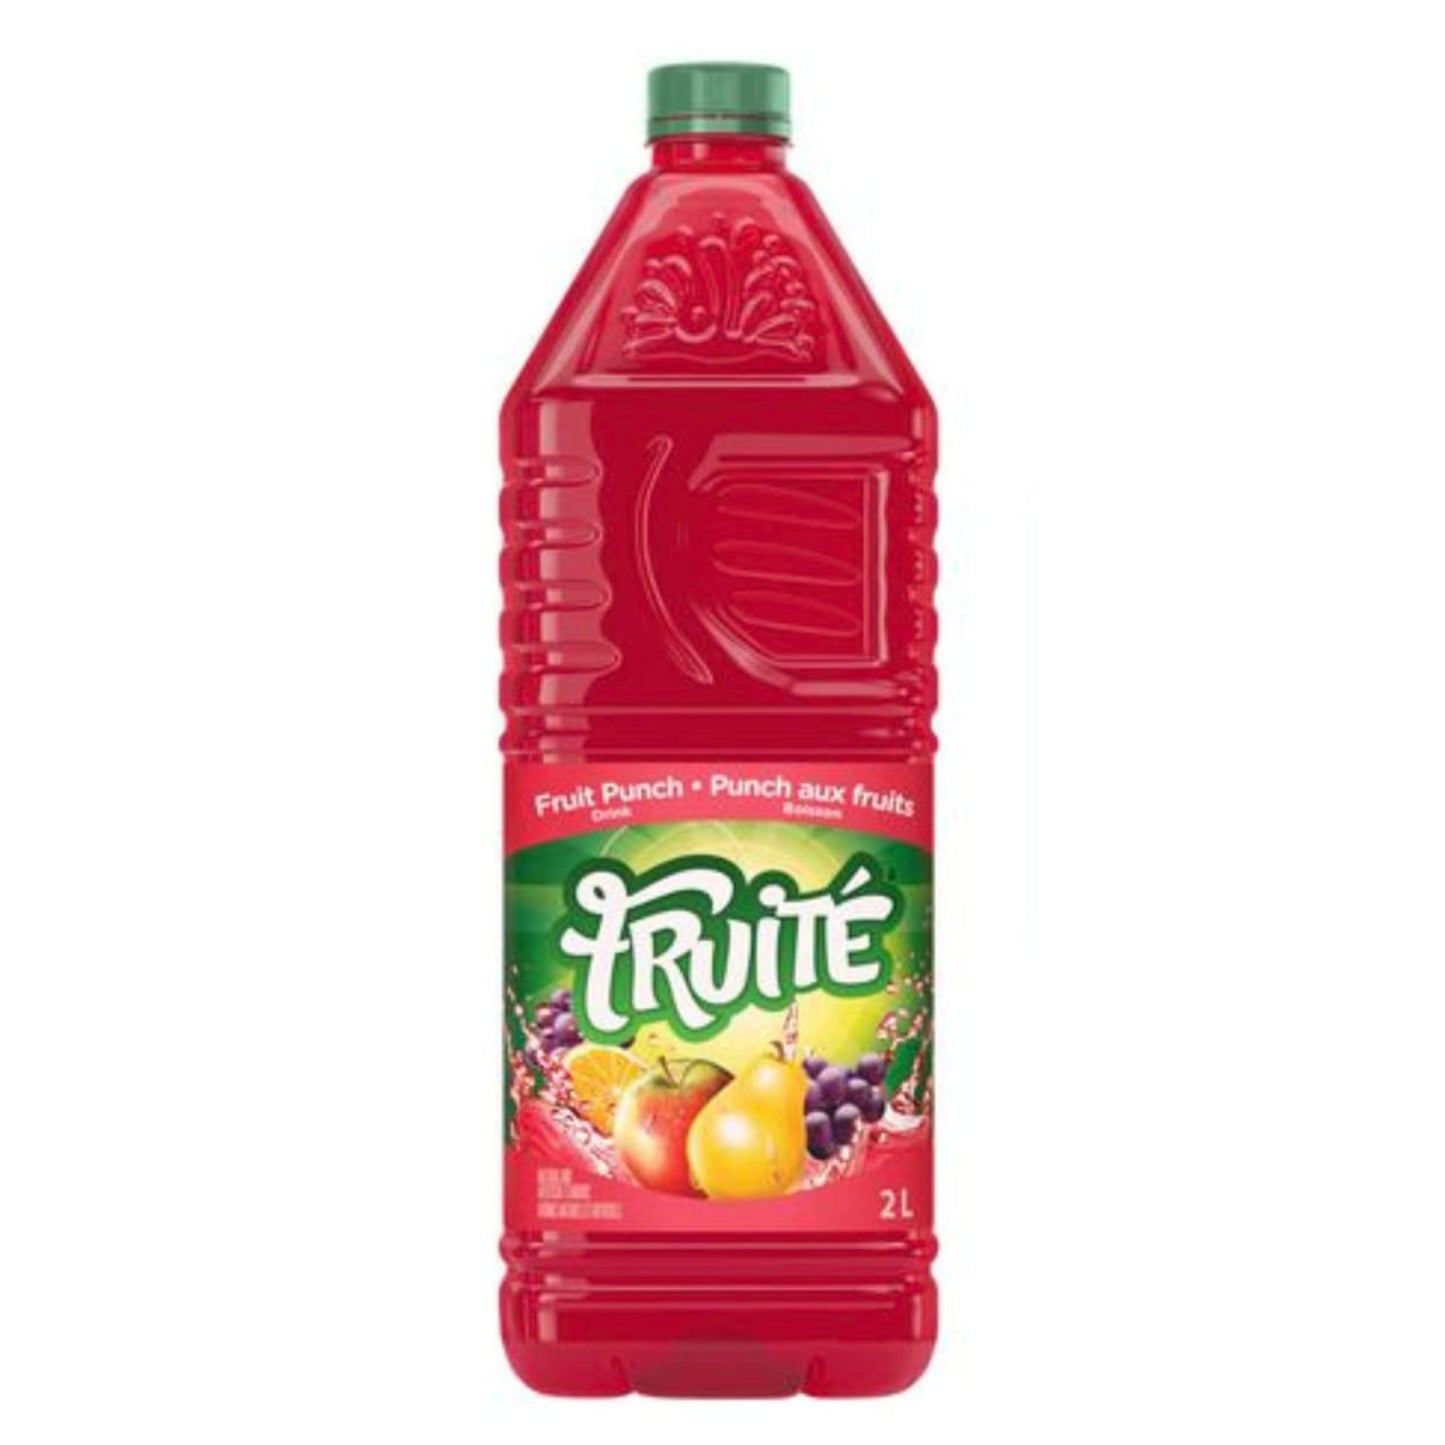 Fruite Fruit Punch Juice Bottle  2L/67fl.oz (Shipped from Canada)